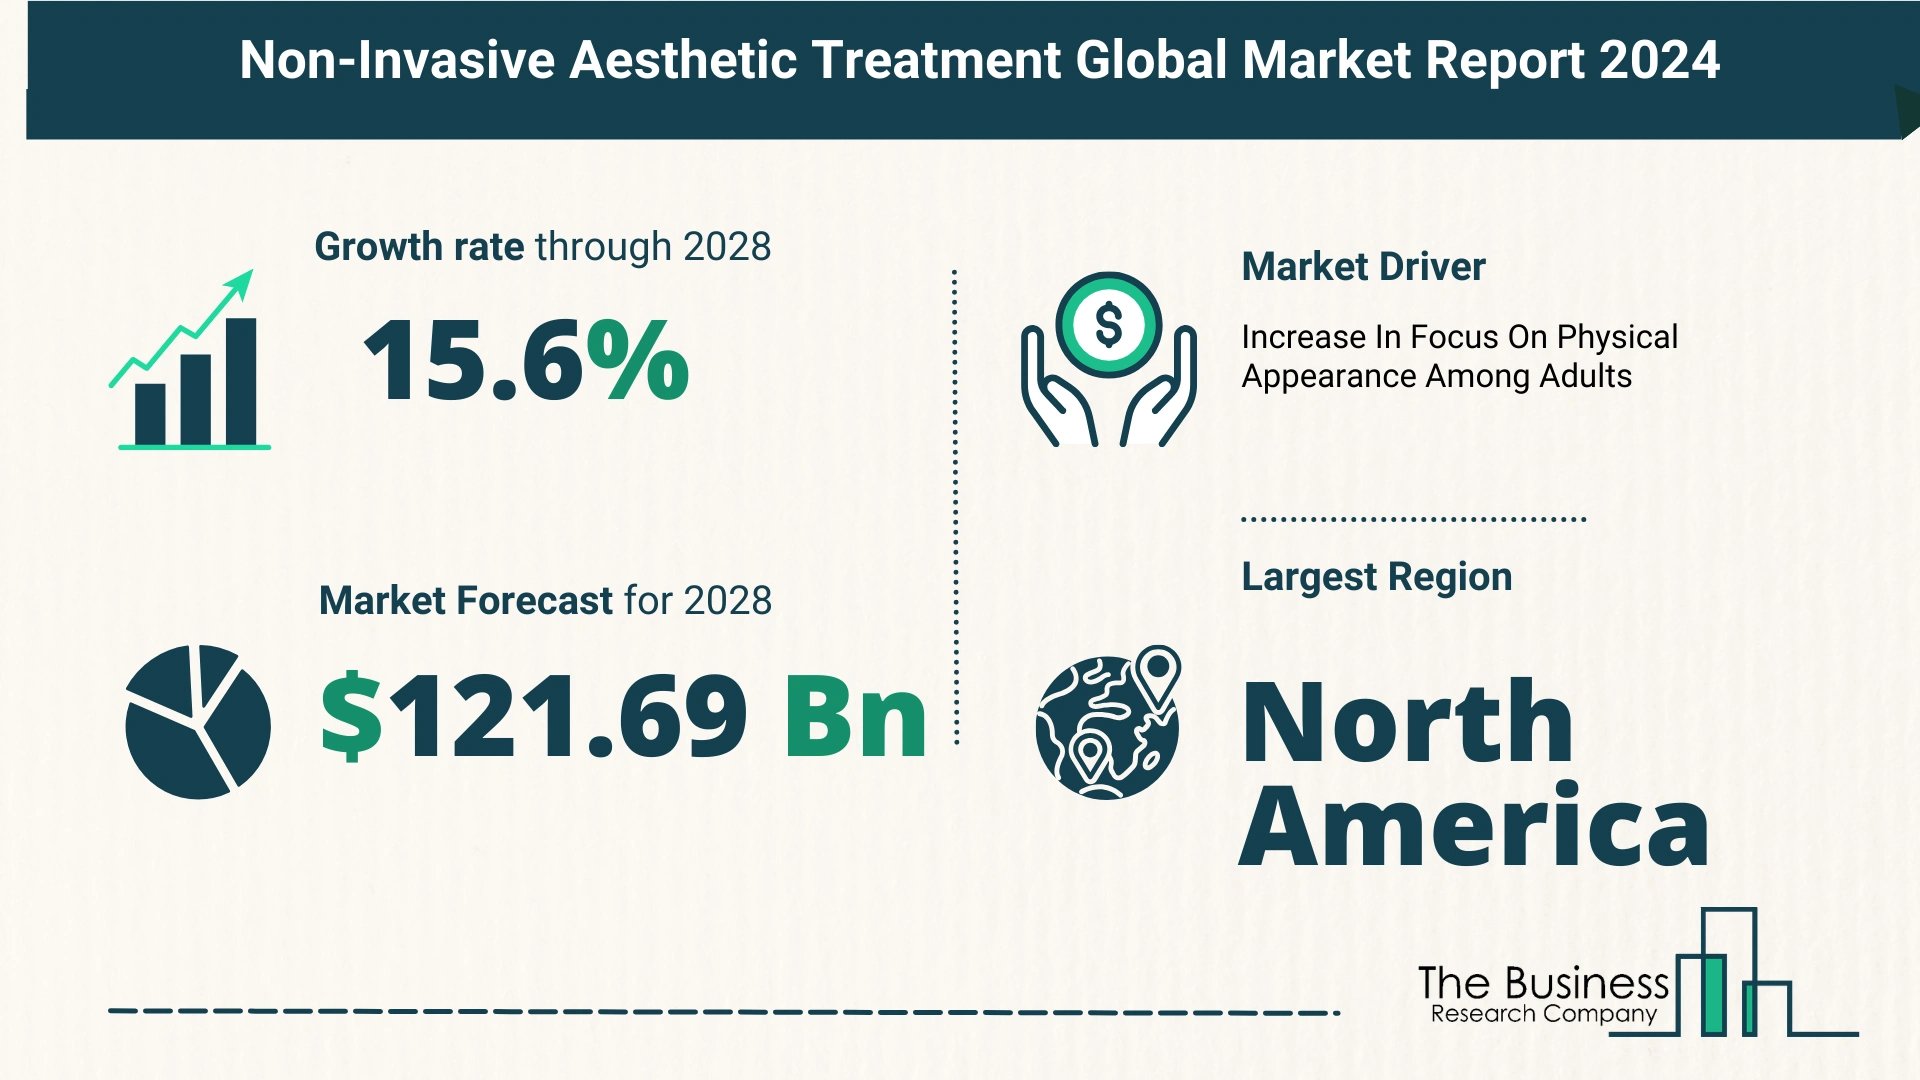 Global Non-Invasive Aesthetic Treatment Market Size